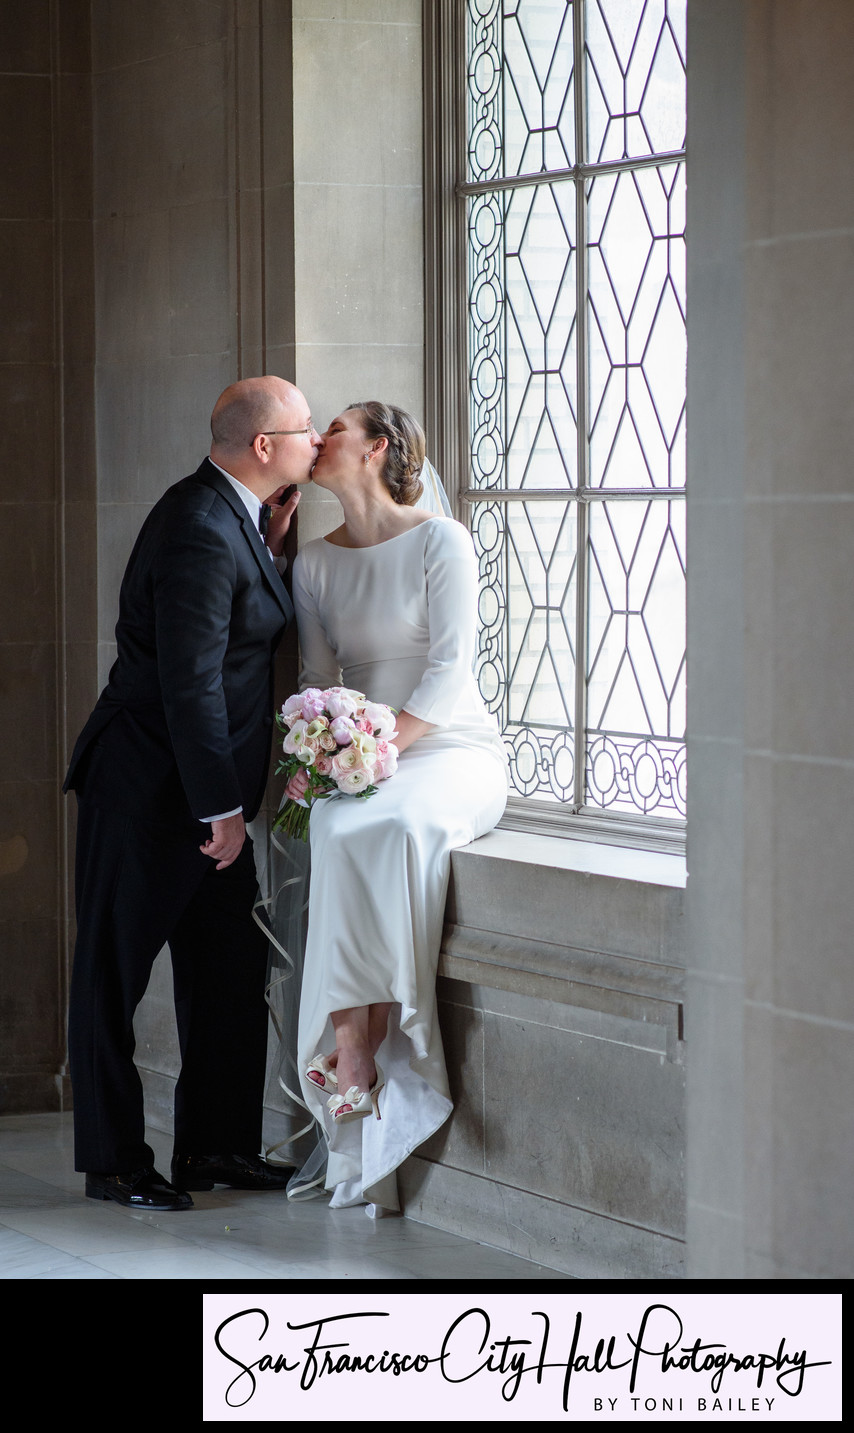 bride and groom kissing in window light at third floor window